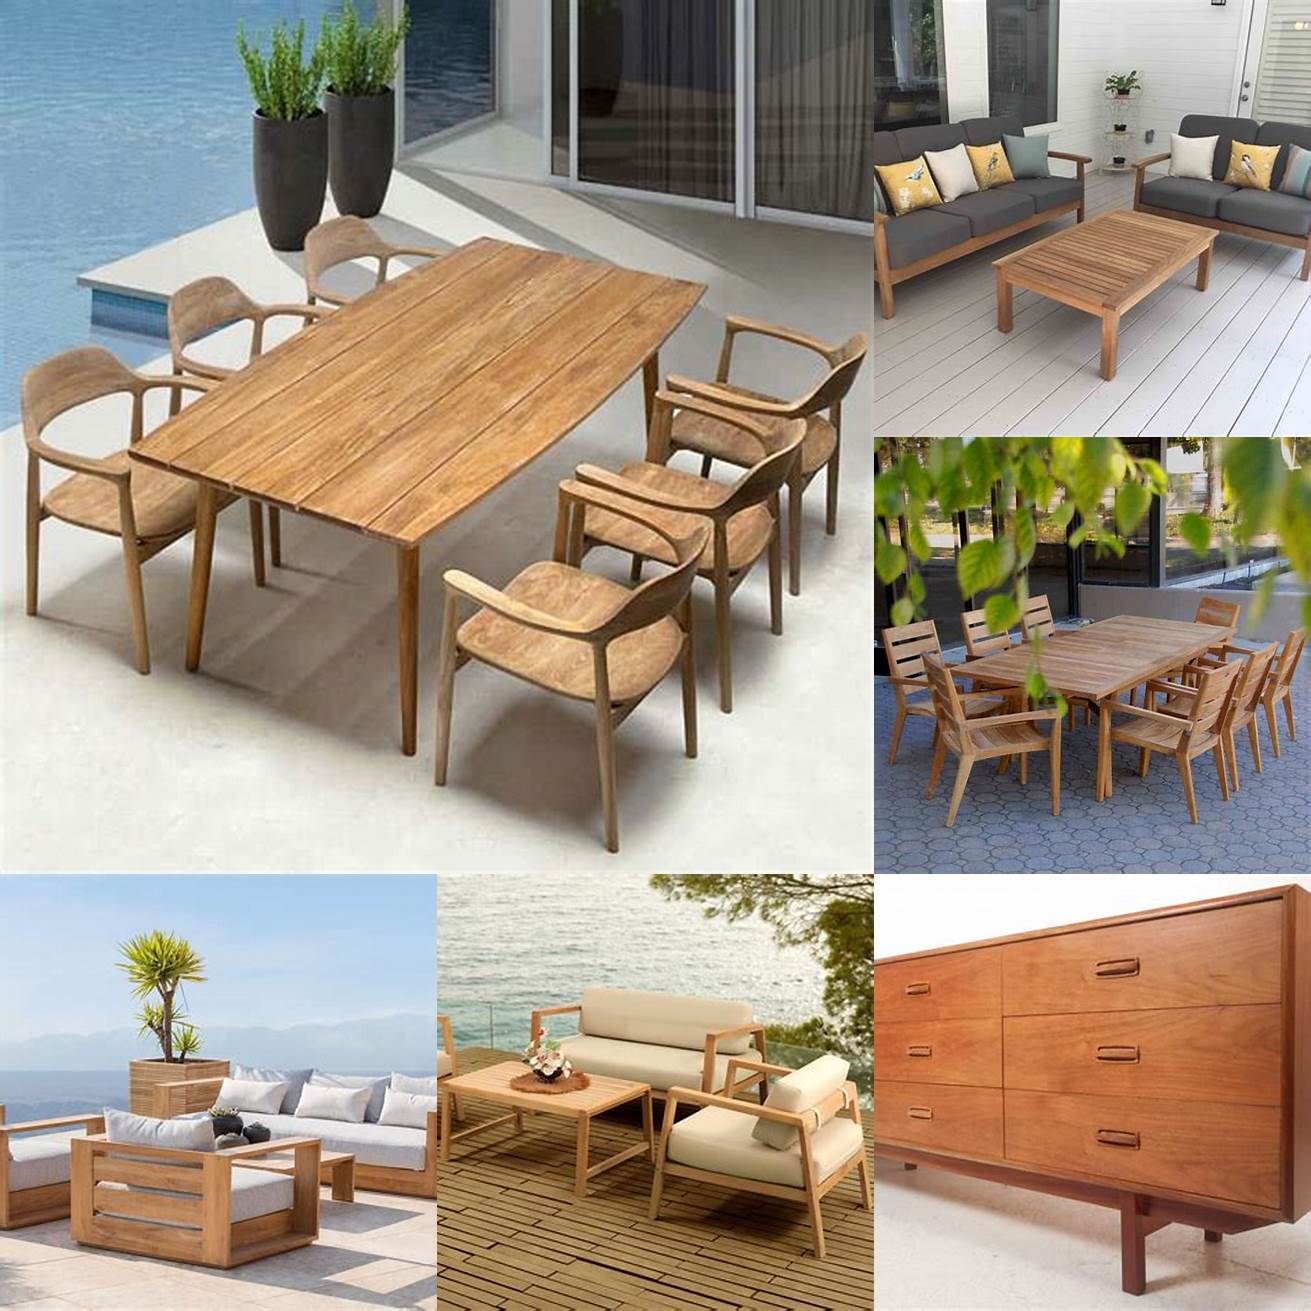 Modern forms of teak furniture